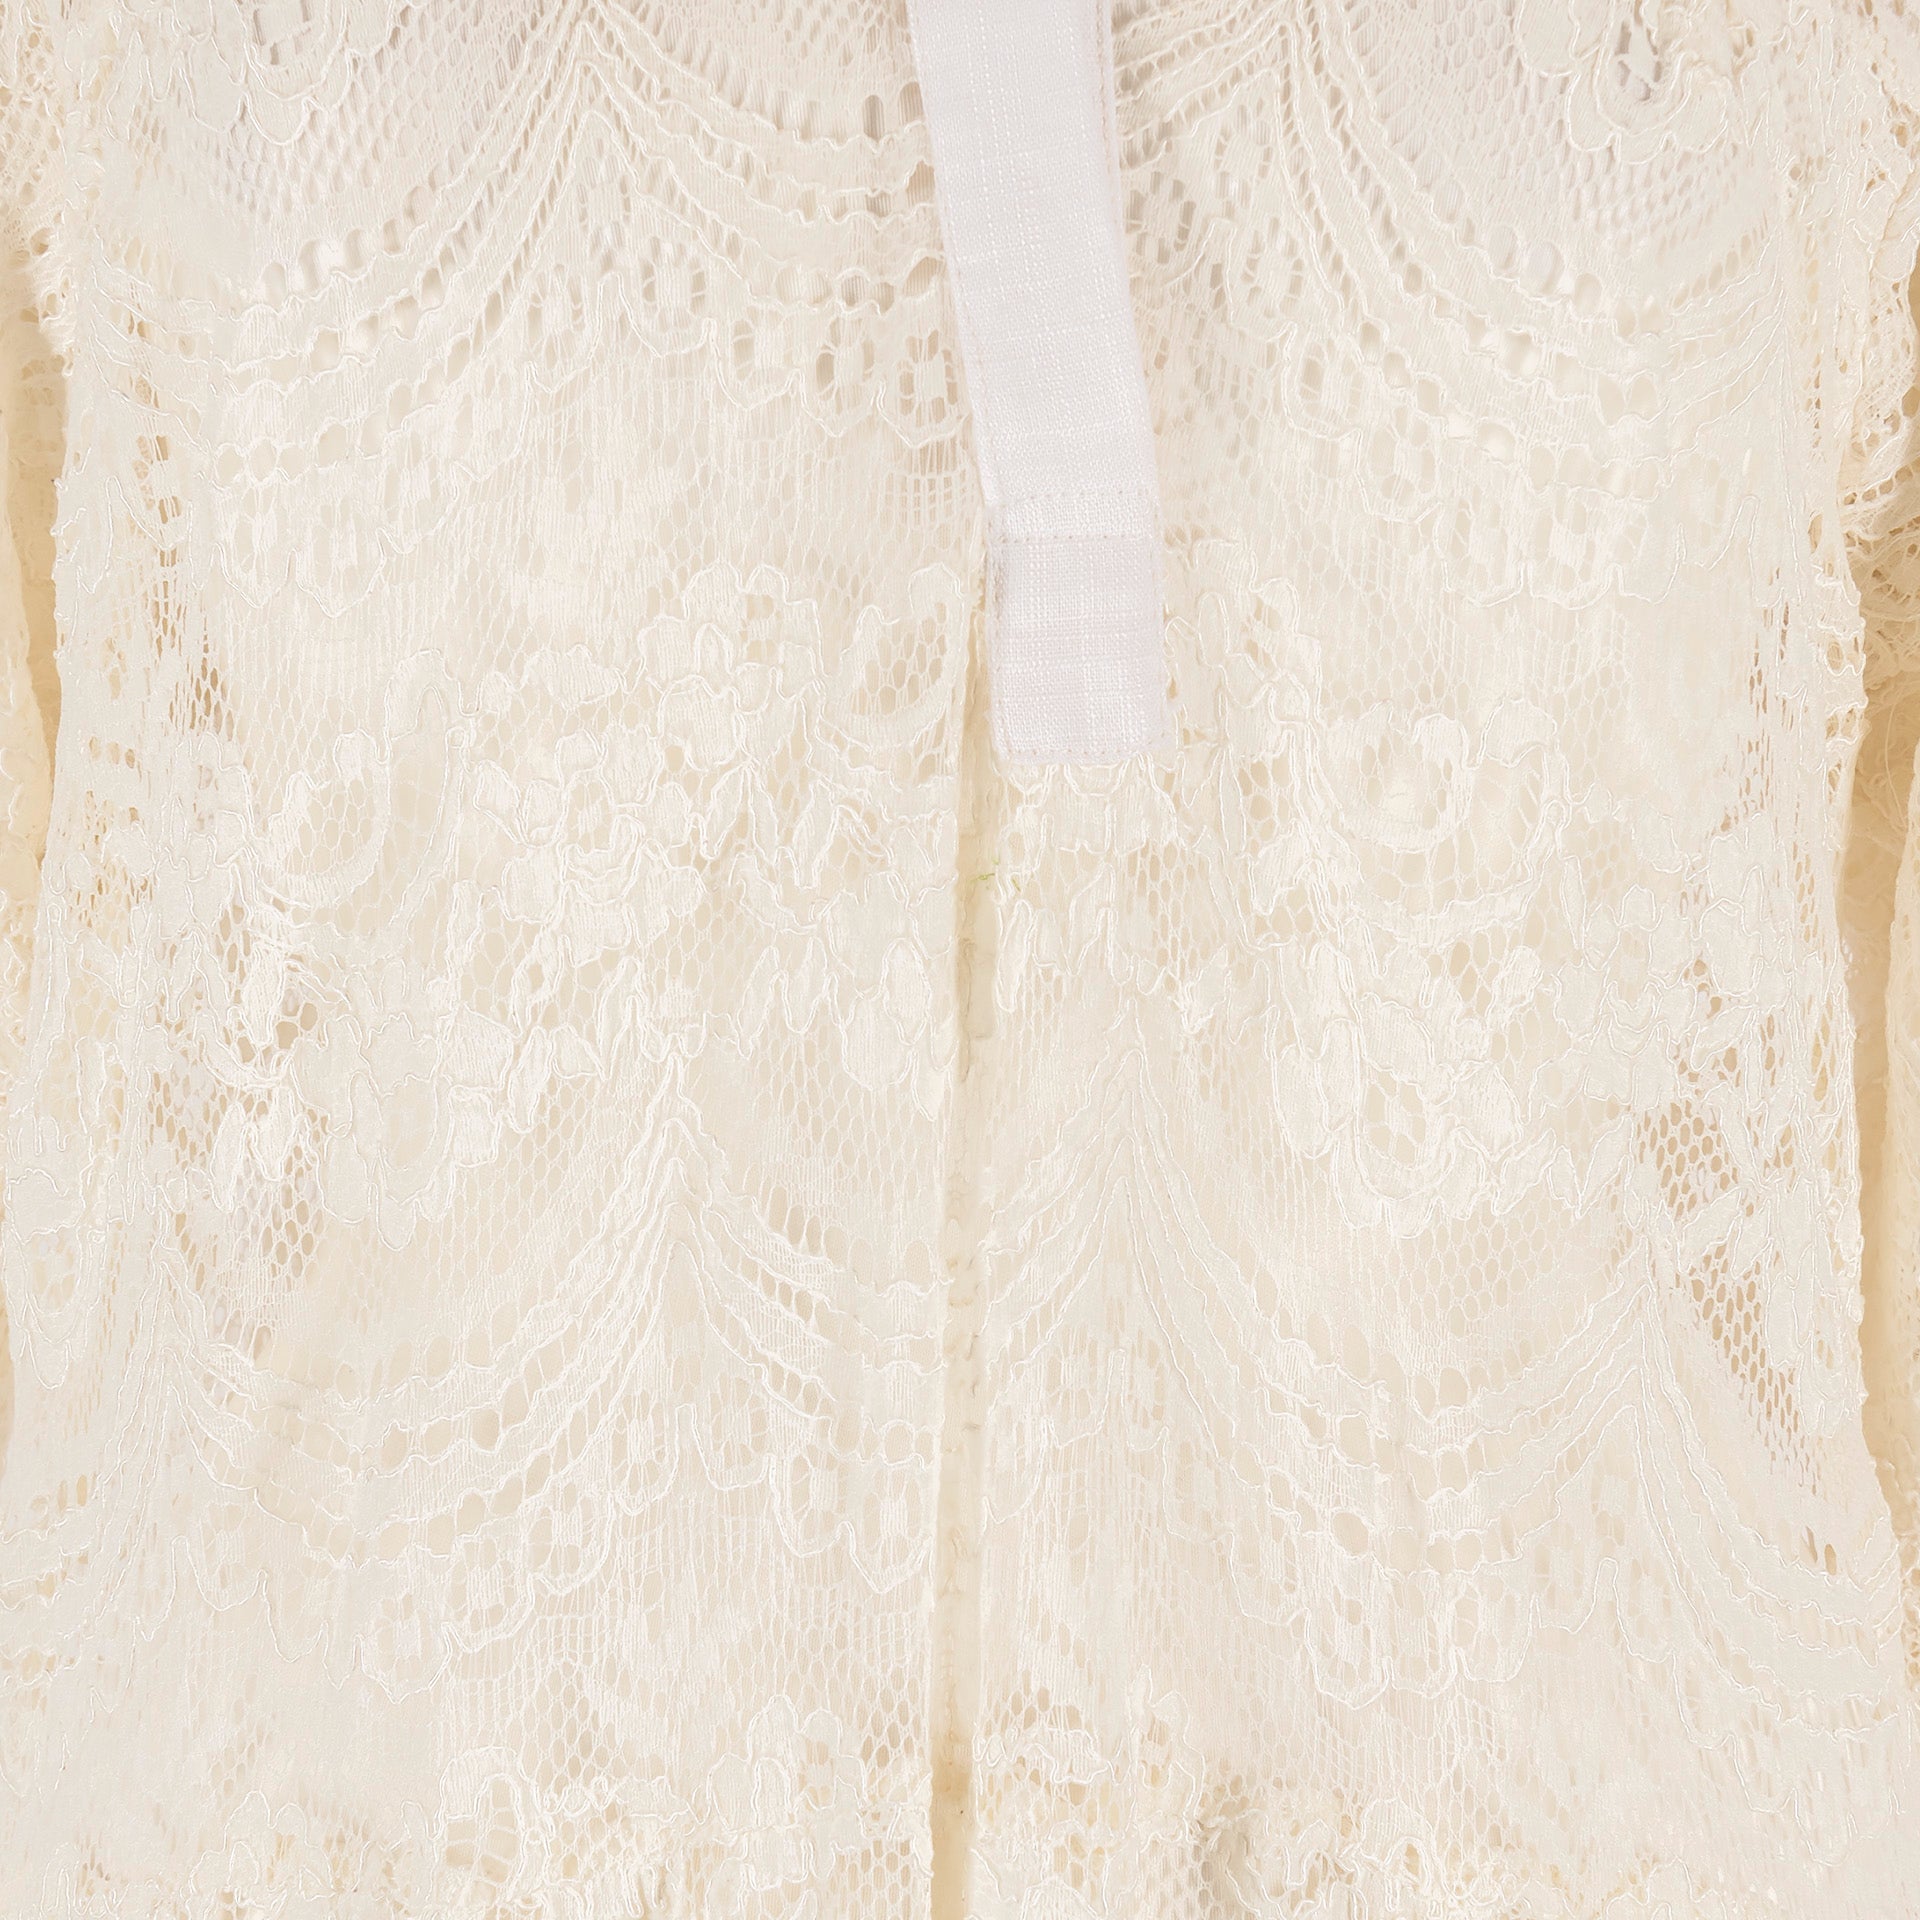 OFF- WHITE DENTELLE DRESS BY IVORI